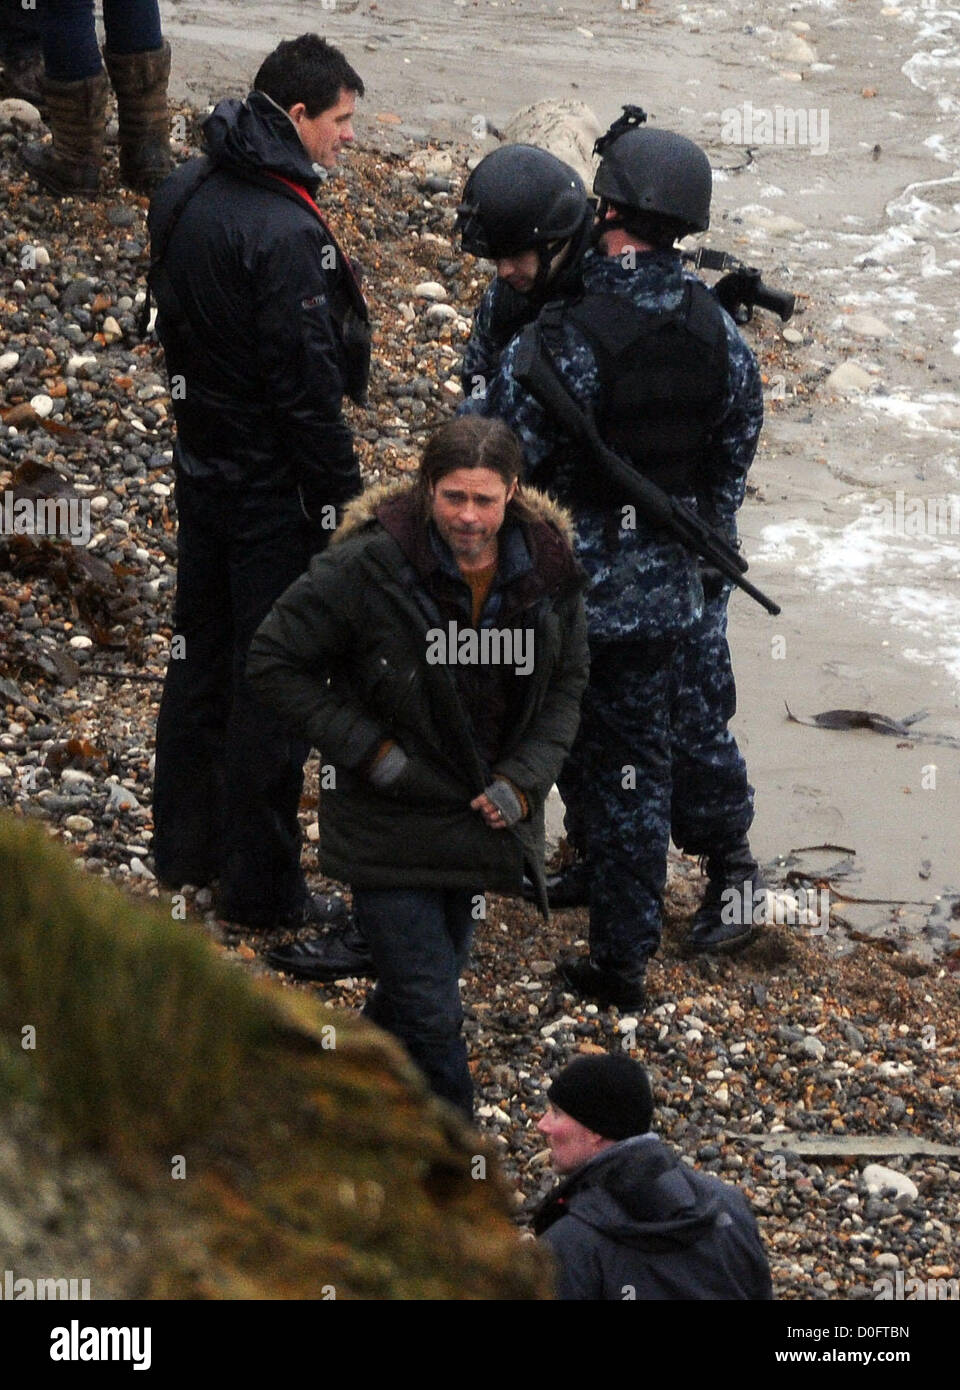 Brad Pitt filming reshoots of his film World War Z at Lulworth Cove in Dorset, Britain UK. Stock Photo